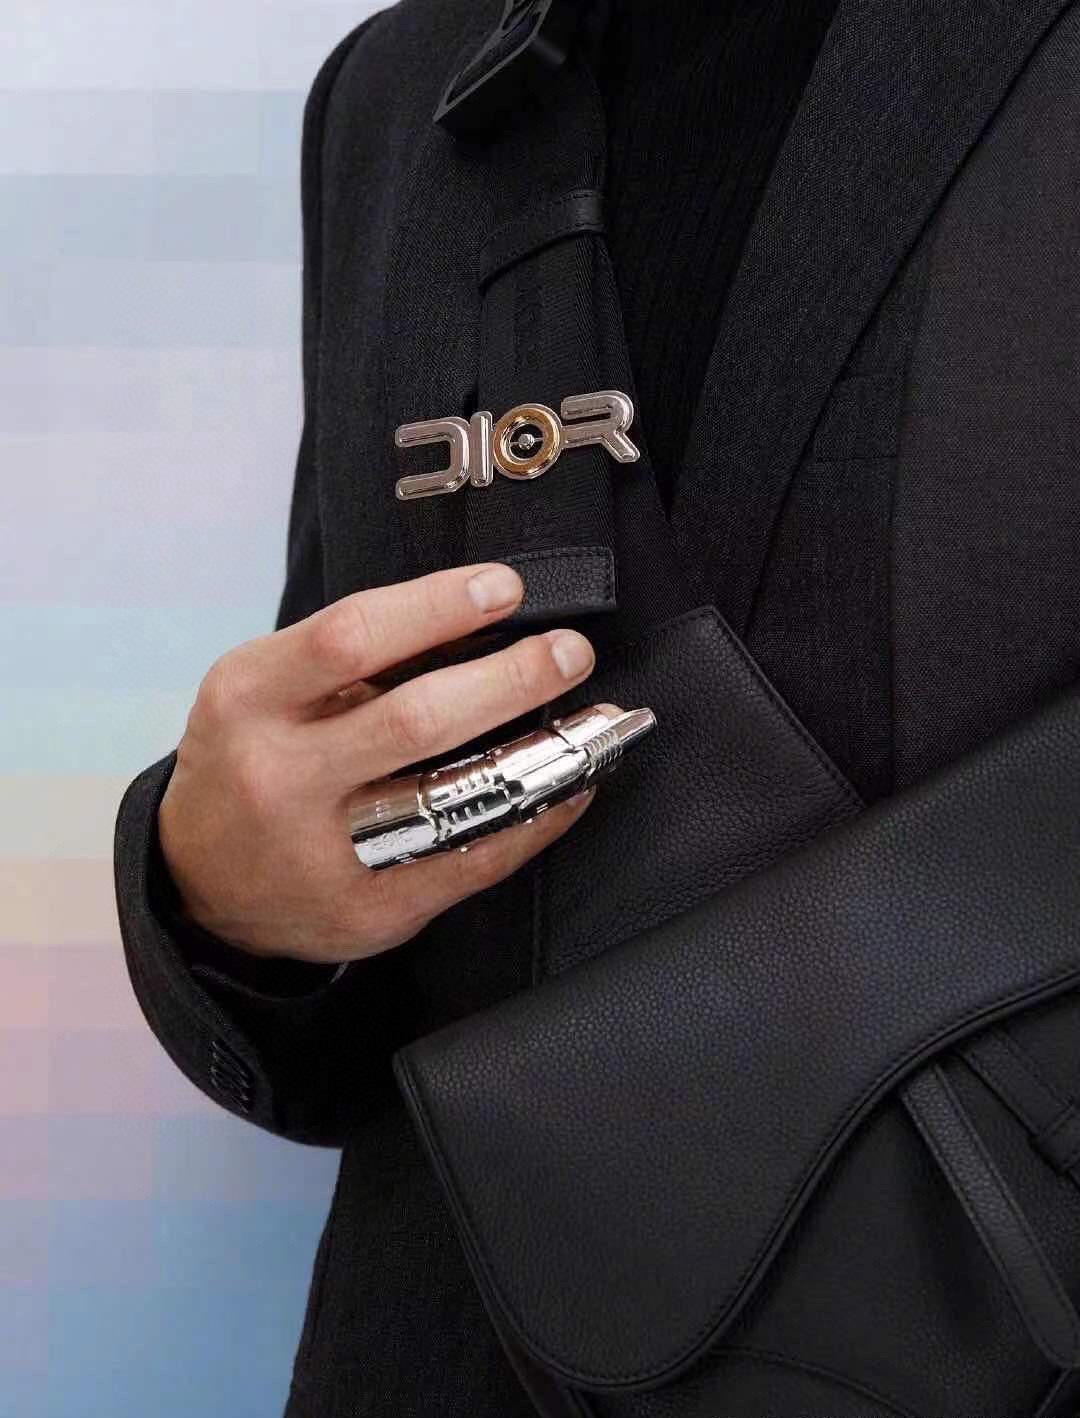 Dior brooch pin